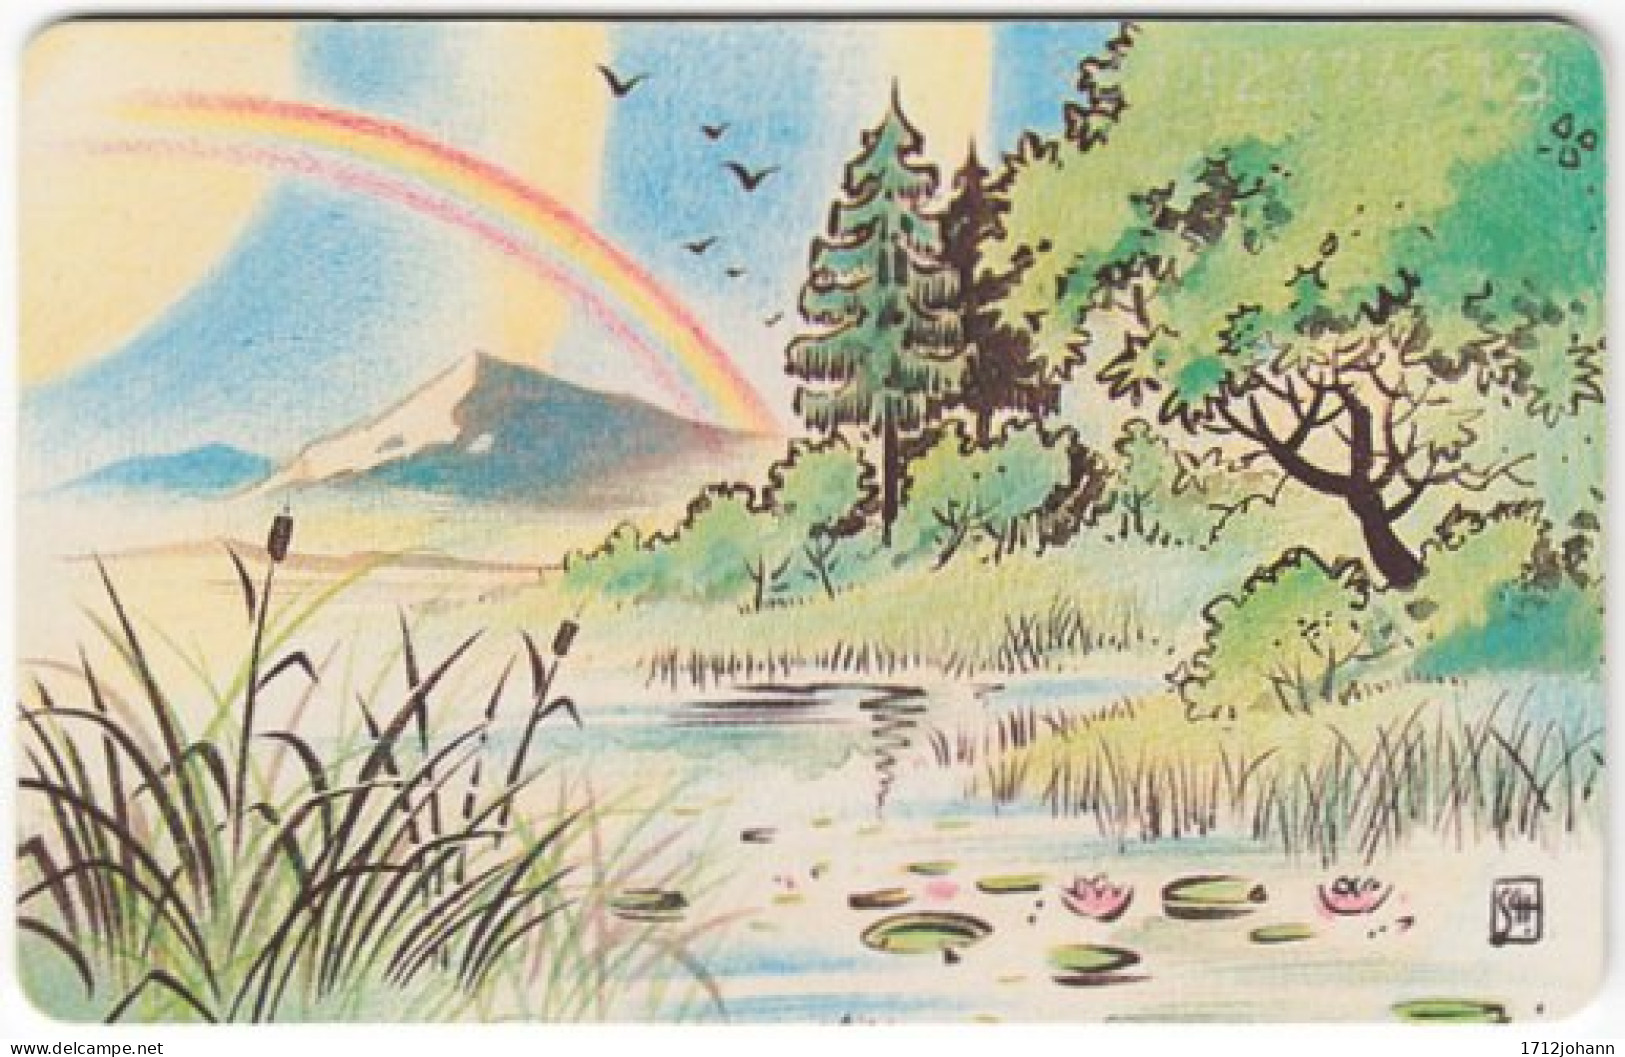 GERMANY B-Serie A-051 - 04 10.93 - Painting, Landscape, Rainbow - Used - B-Series: Benefizkarten